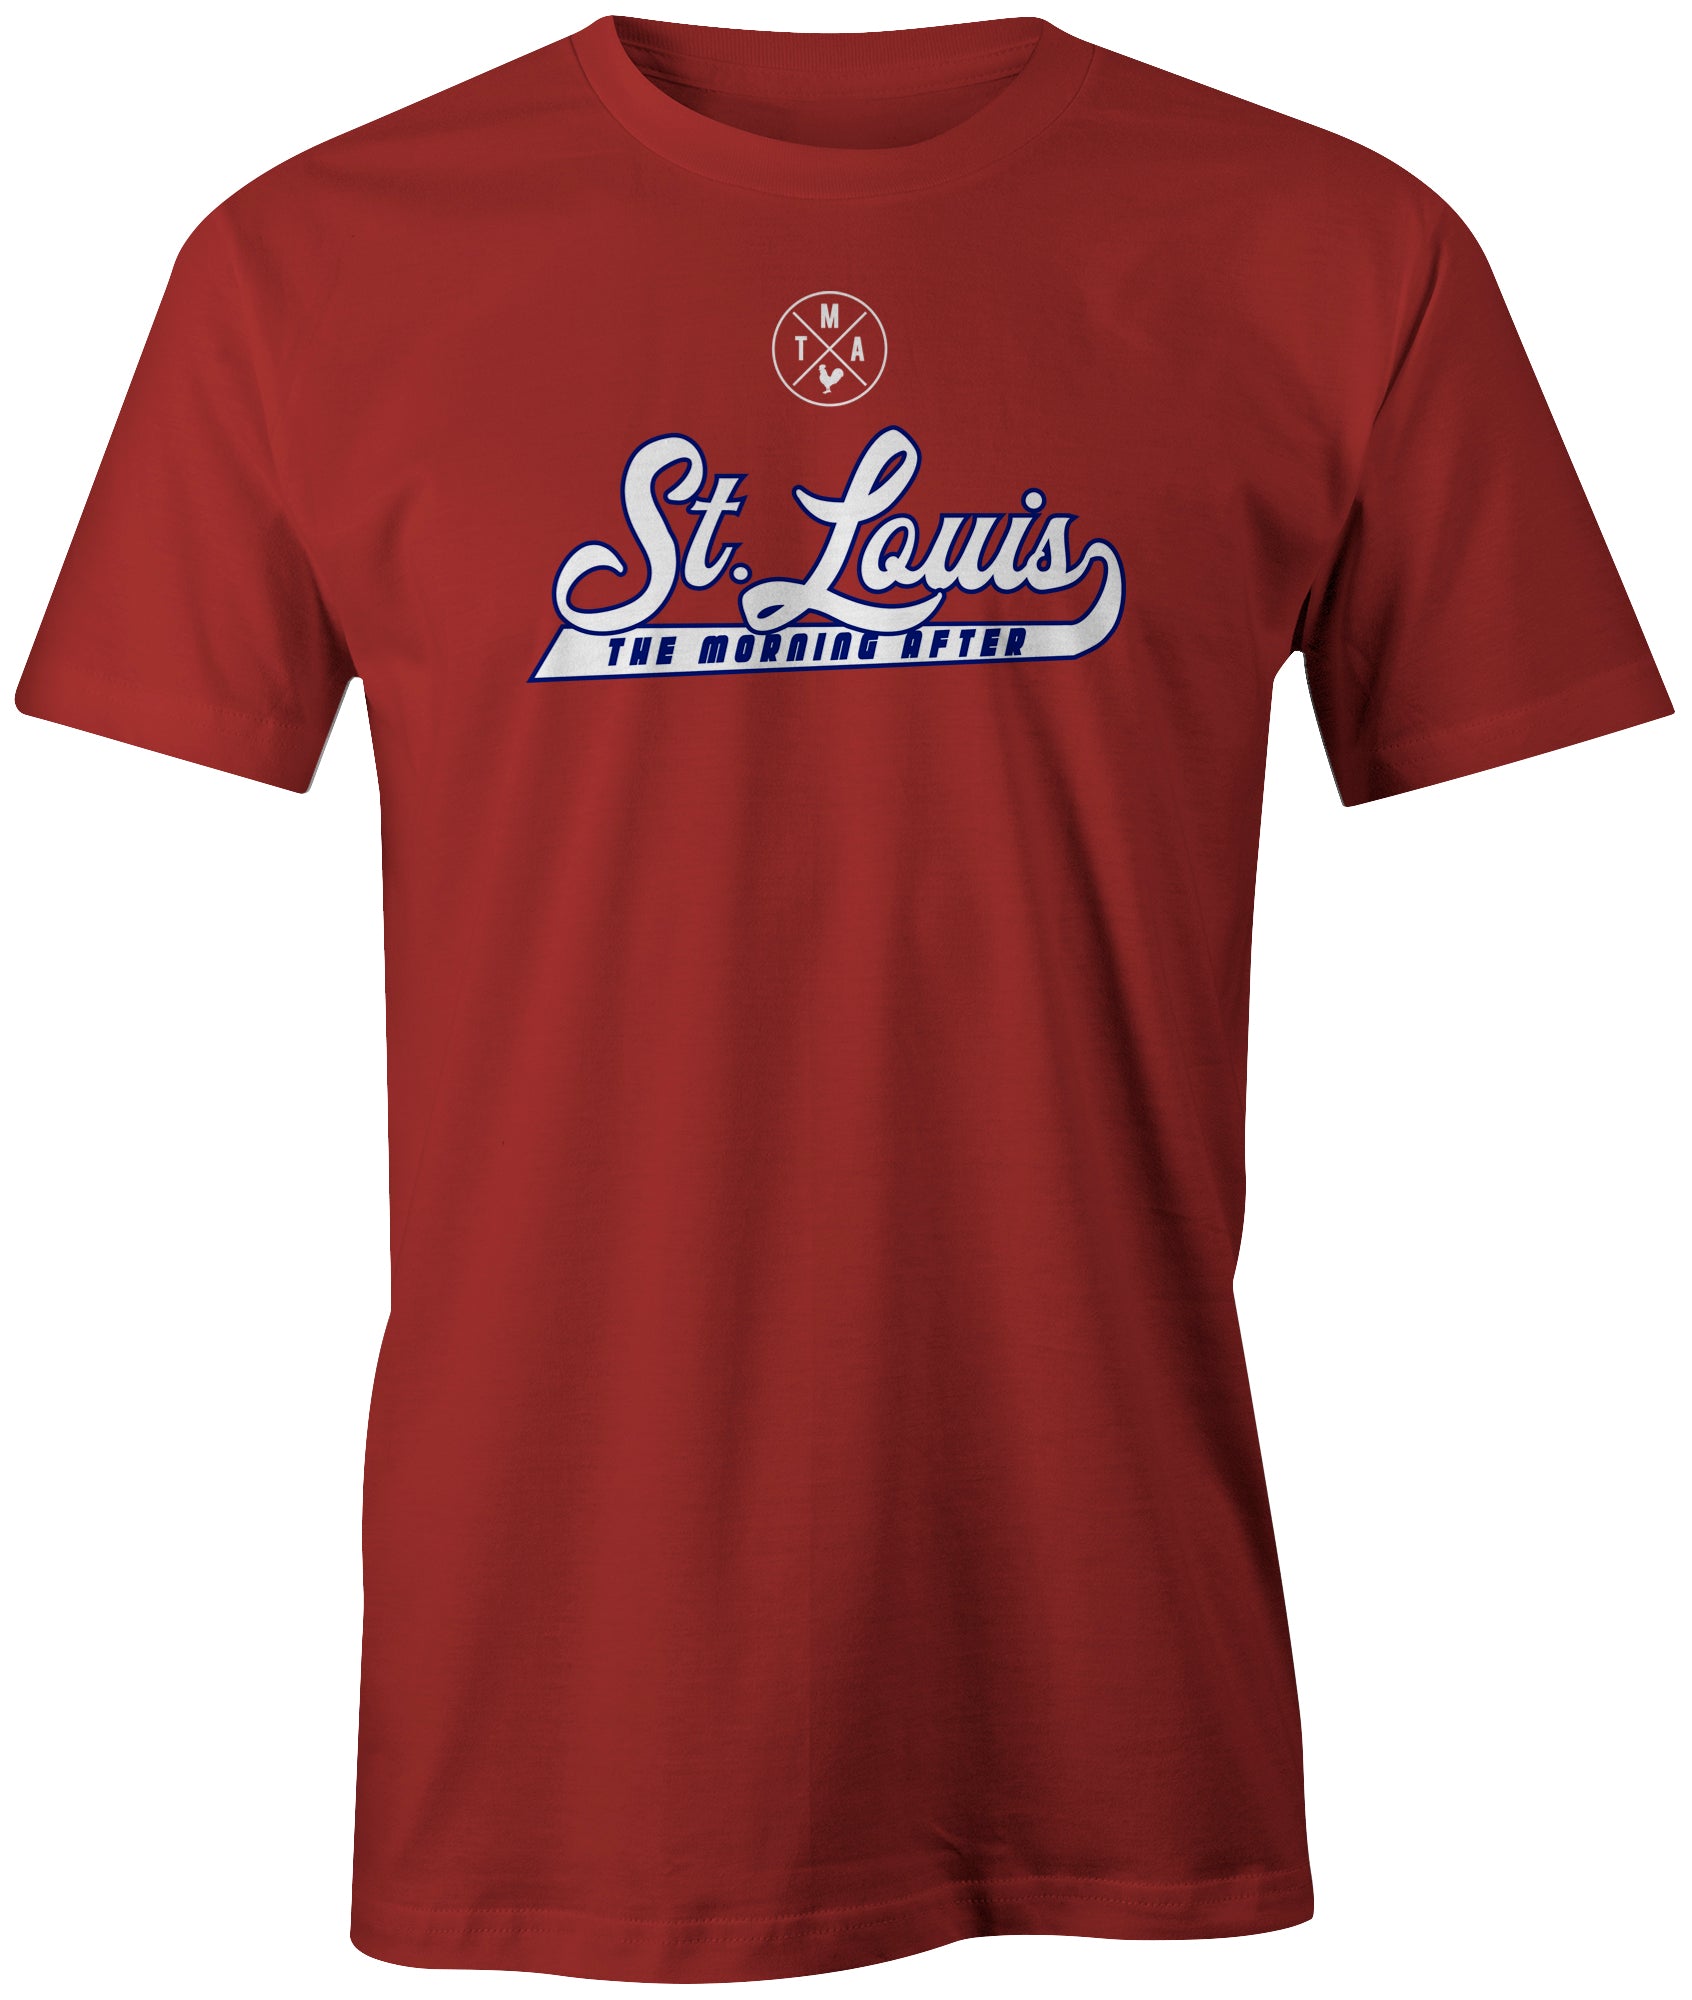 St. Louis Blues T-Shirts, Blues Tees, Shirts